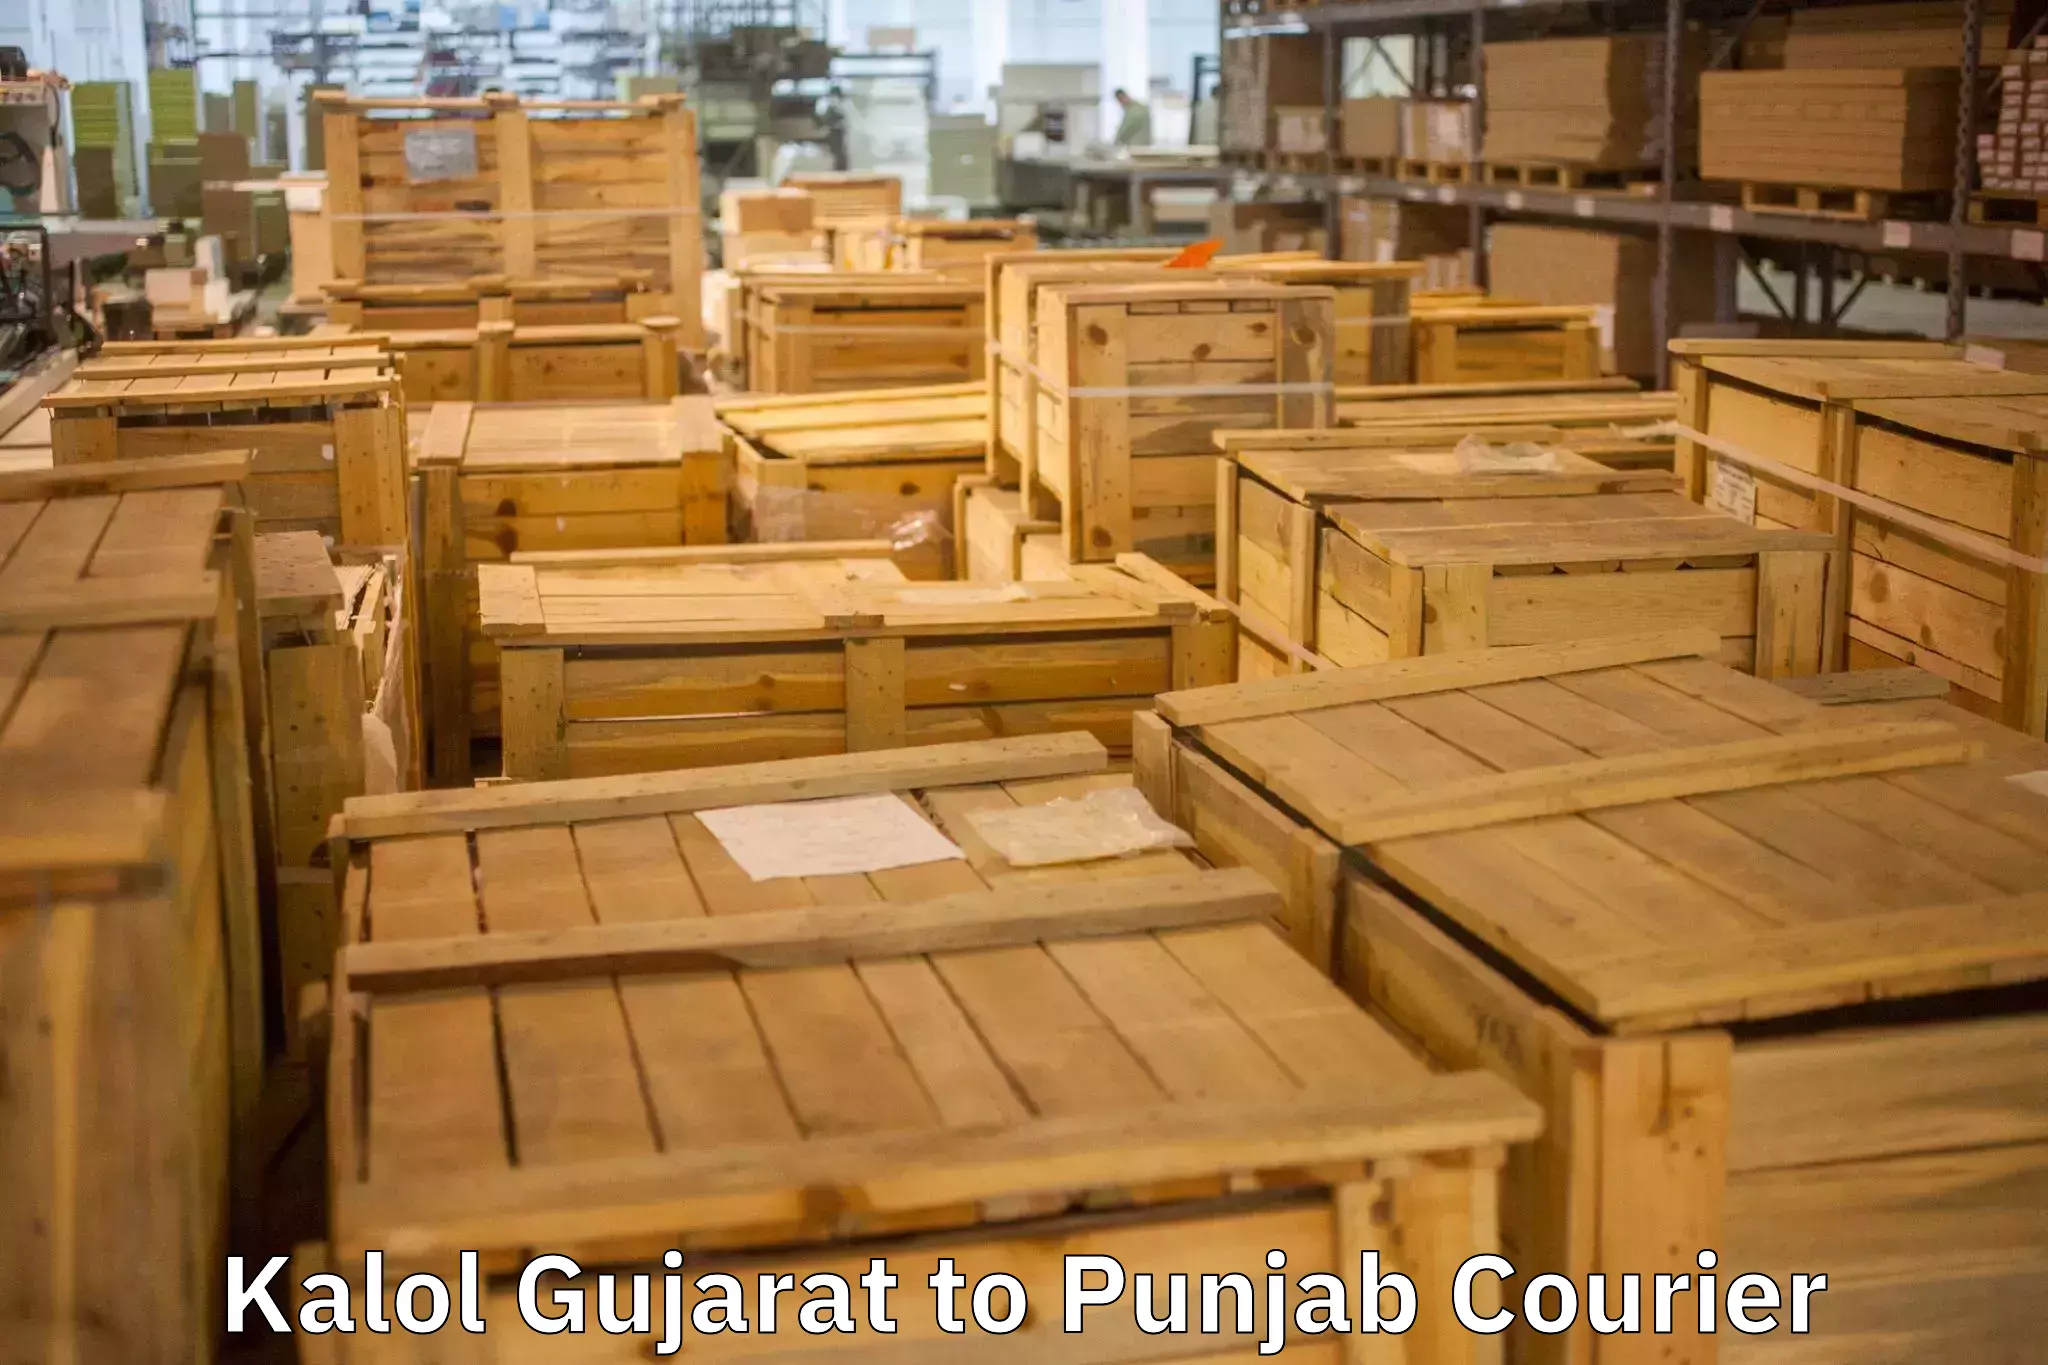 High-quality moving services Kalol Gujarat to Amritsar